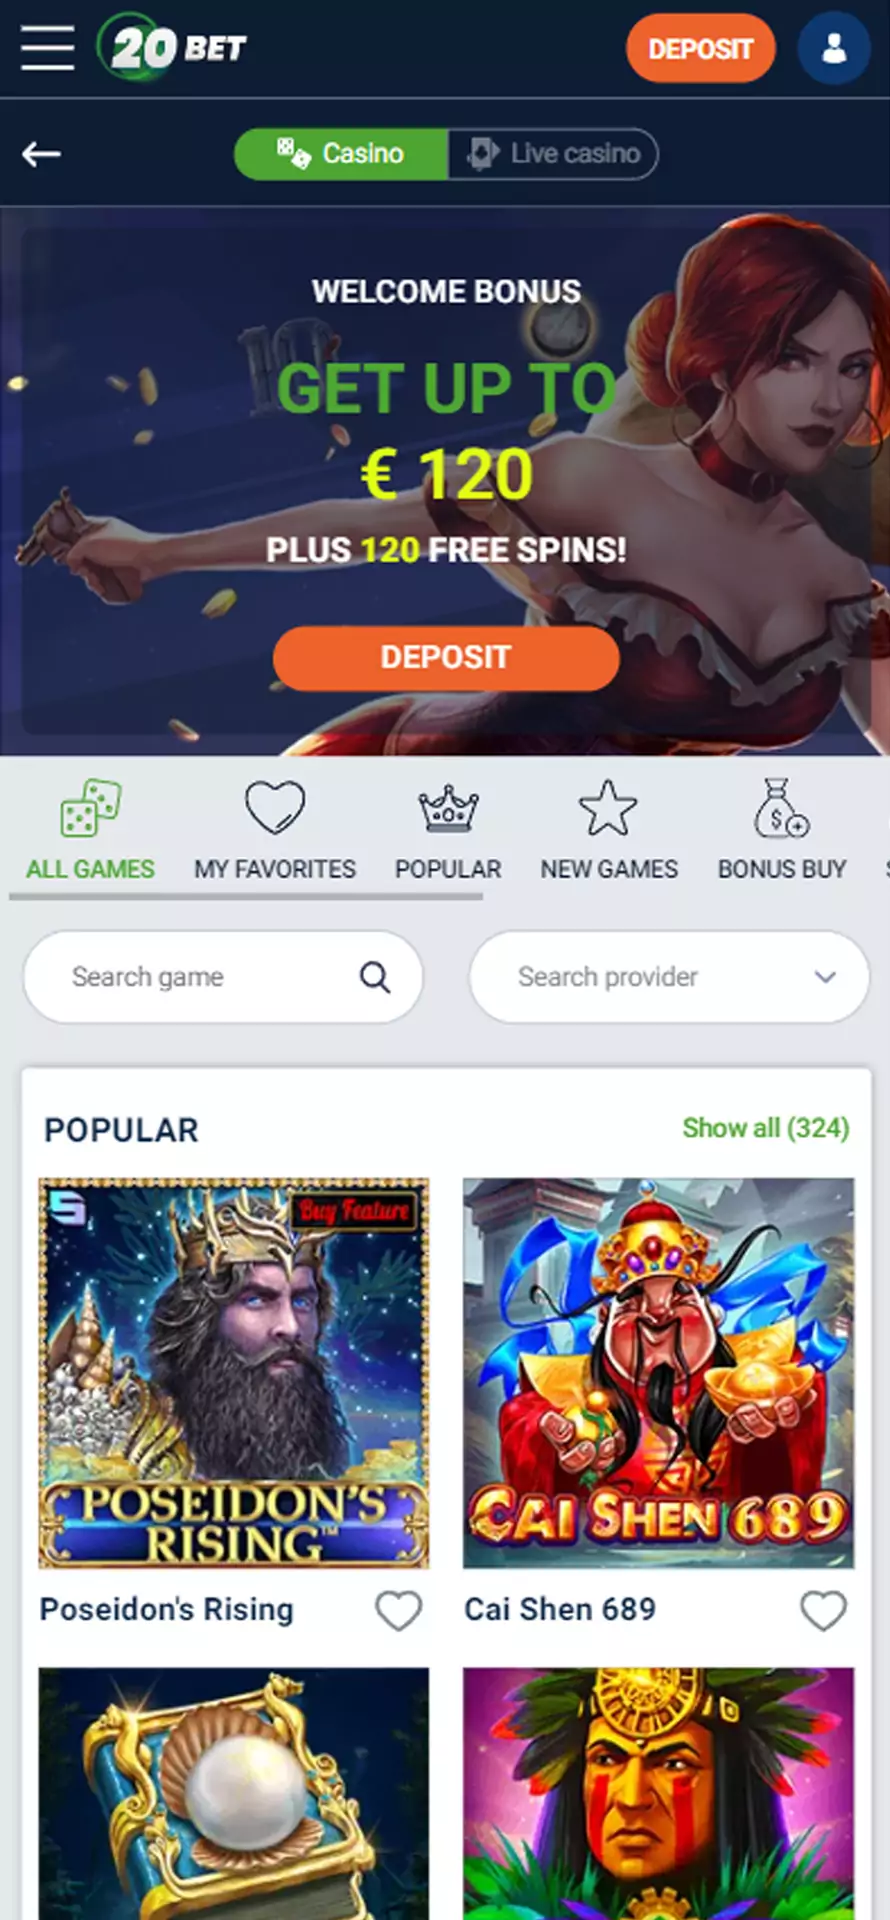 Play casino in 20bet app.